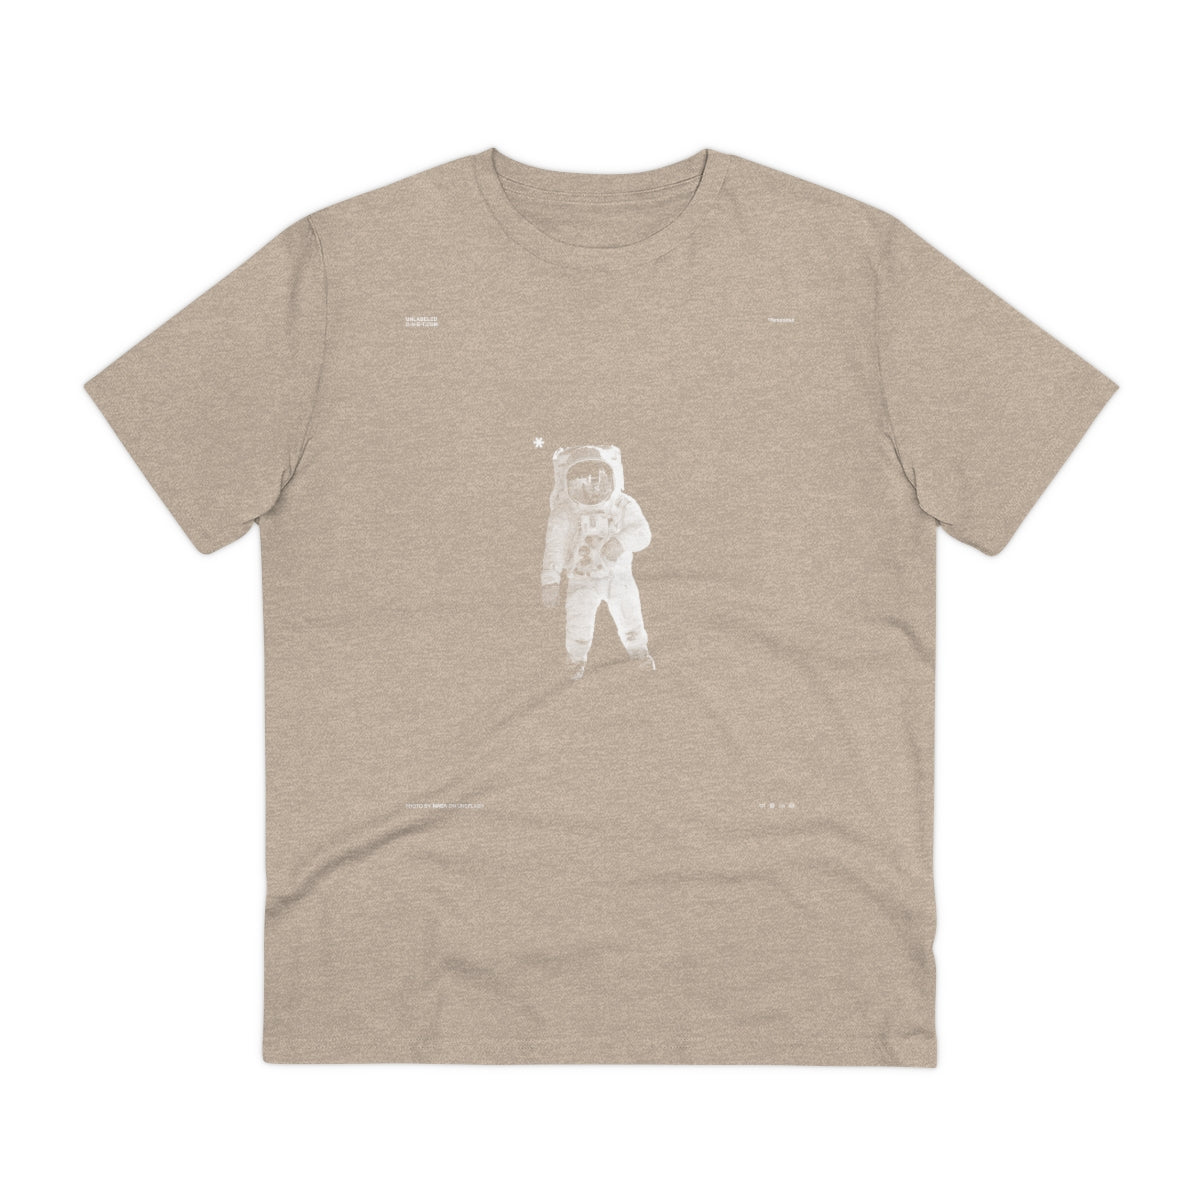 Moon - Premium Organic T-shirt - Unisex